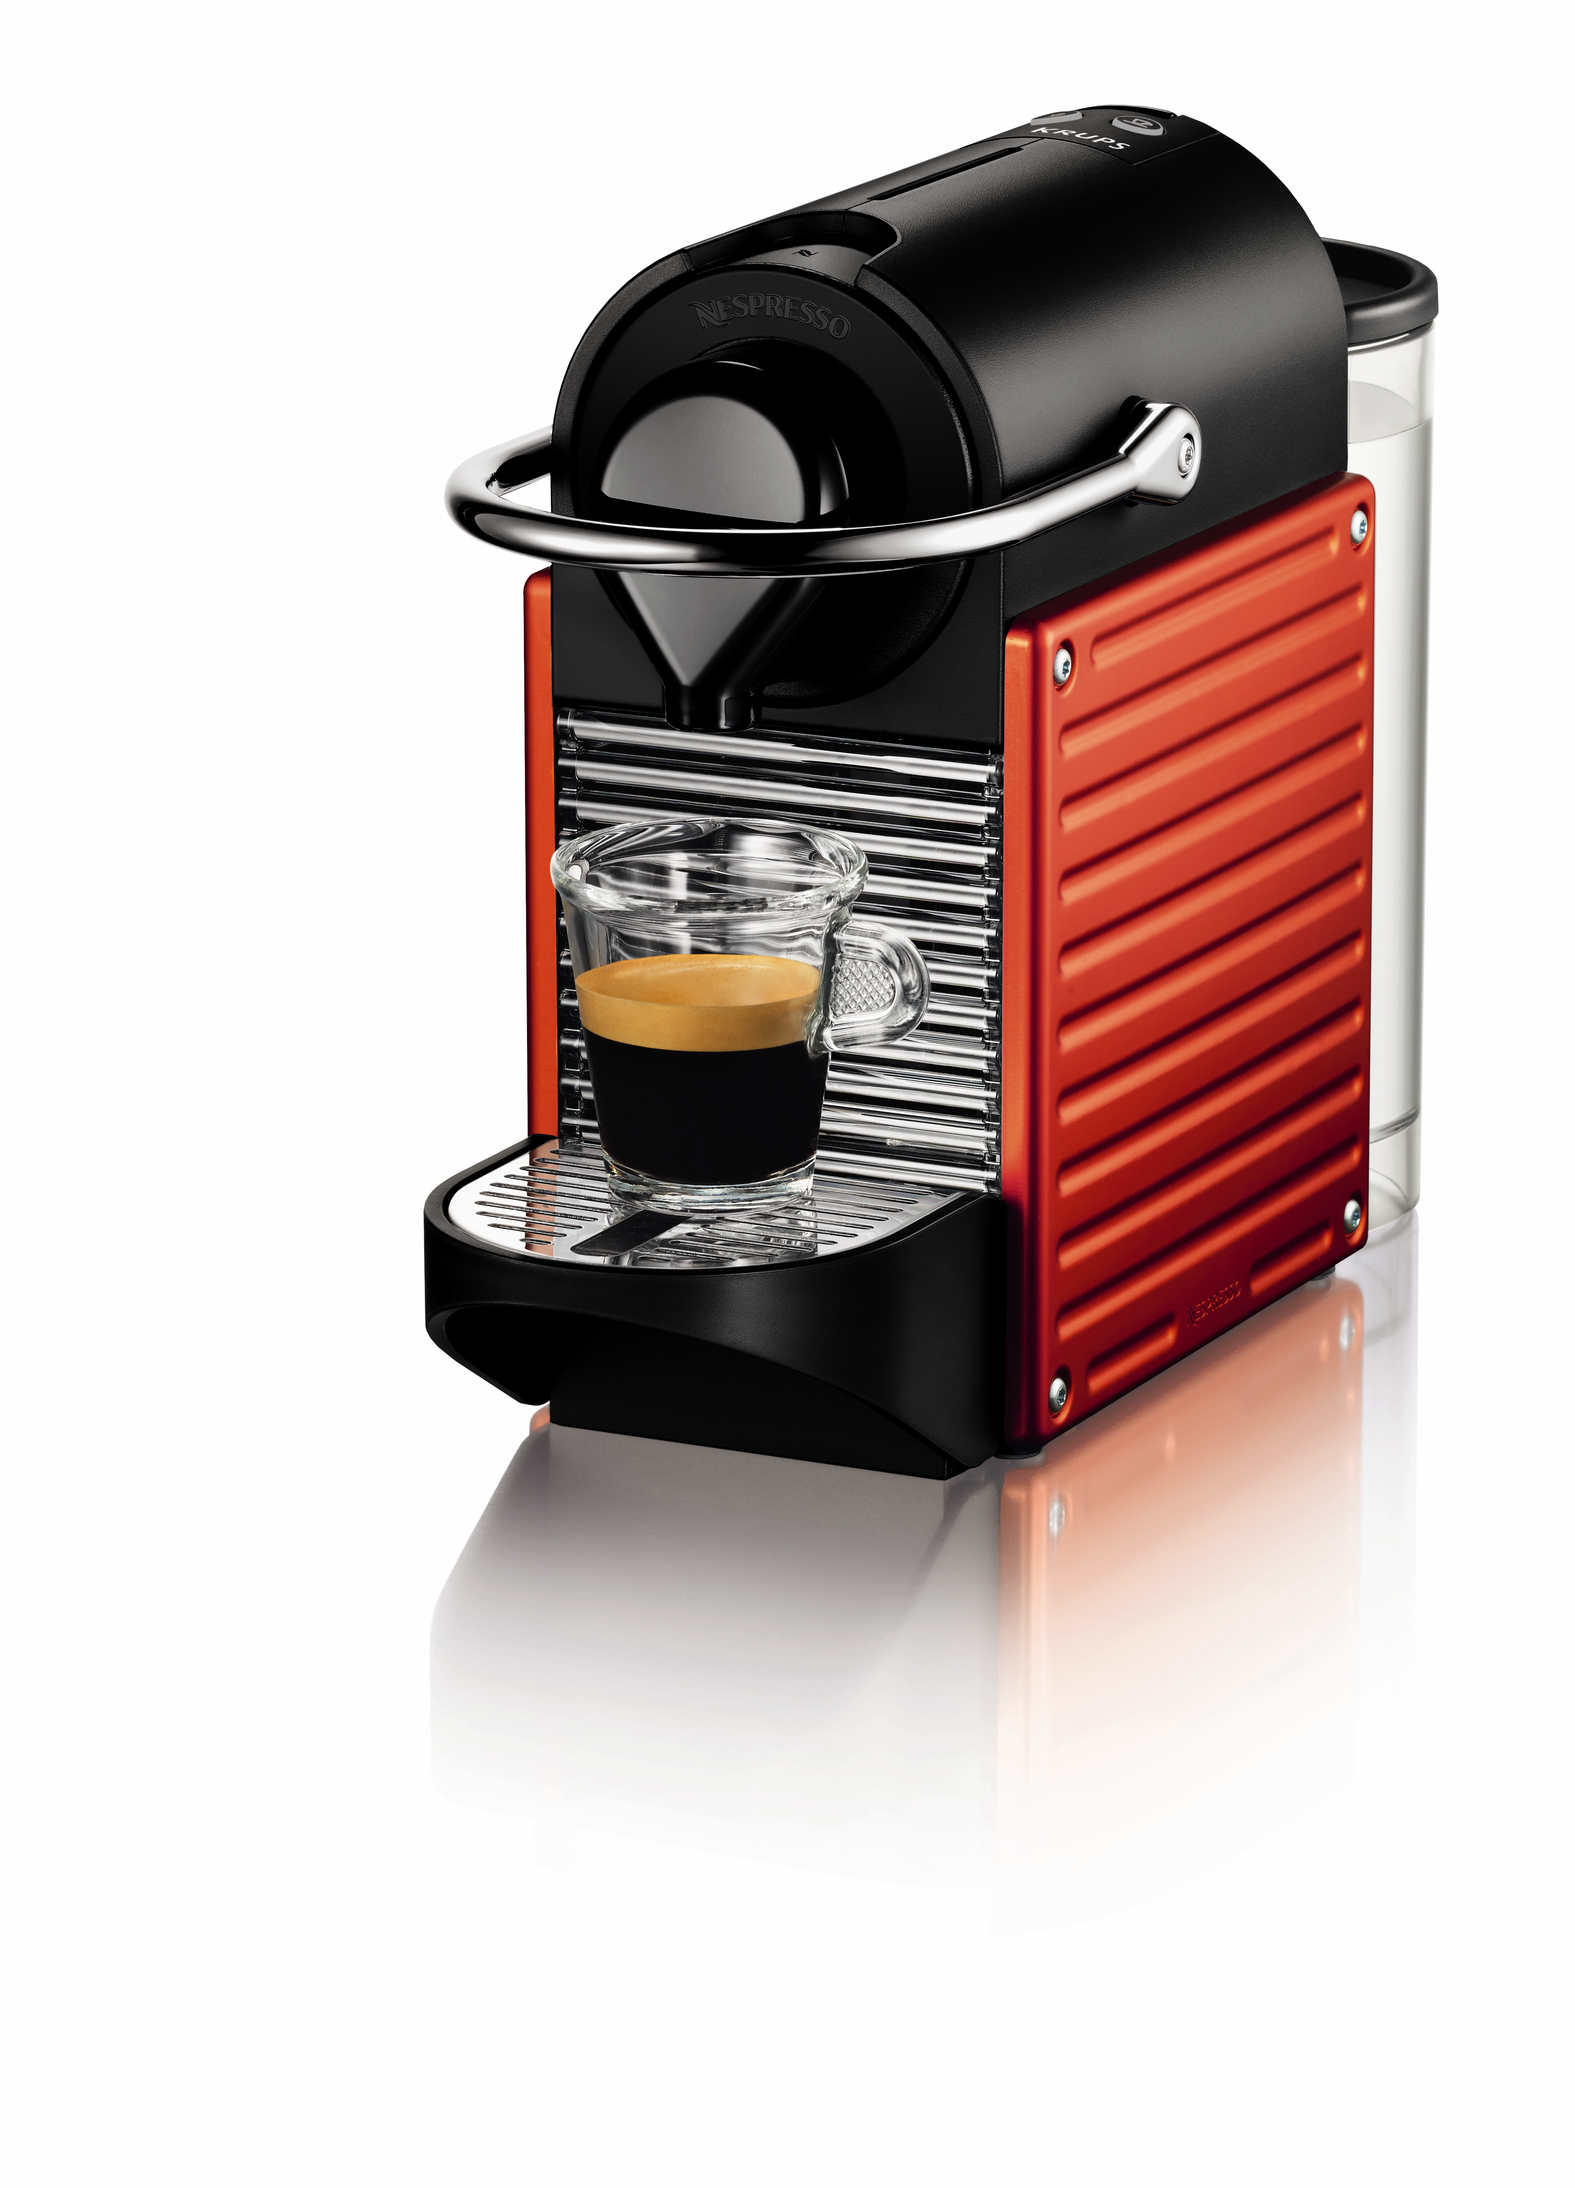 Krups Nespresso XN3045 coffee maker